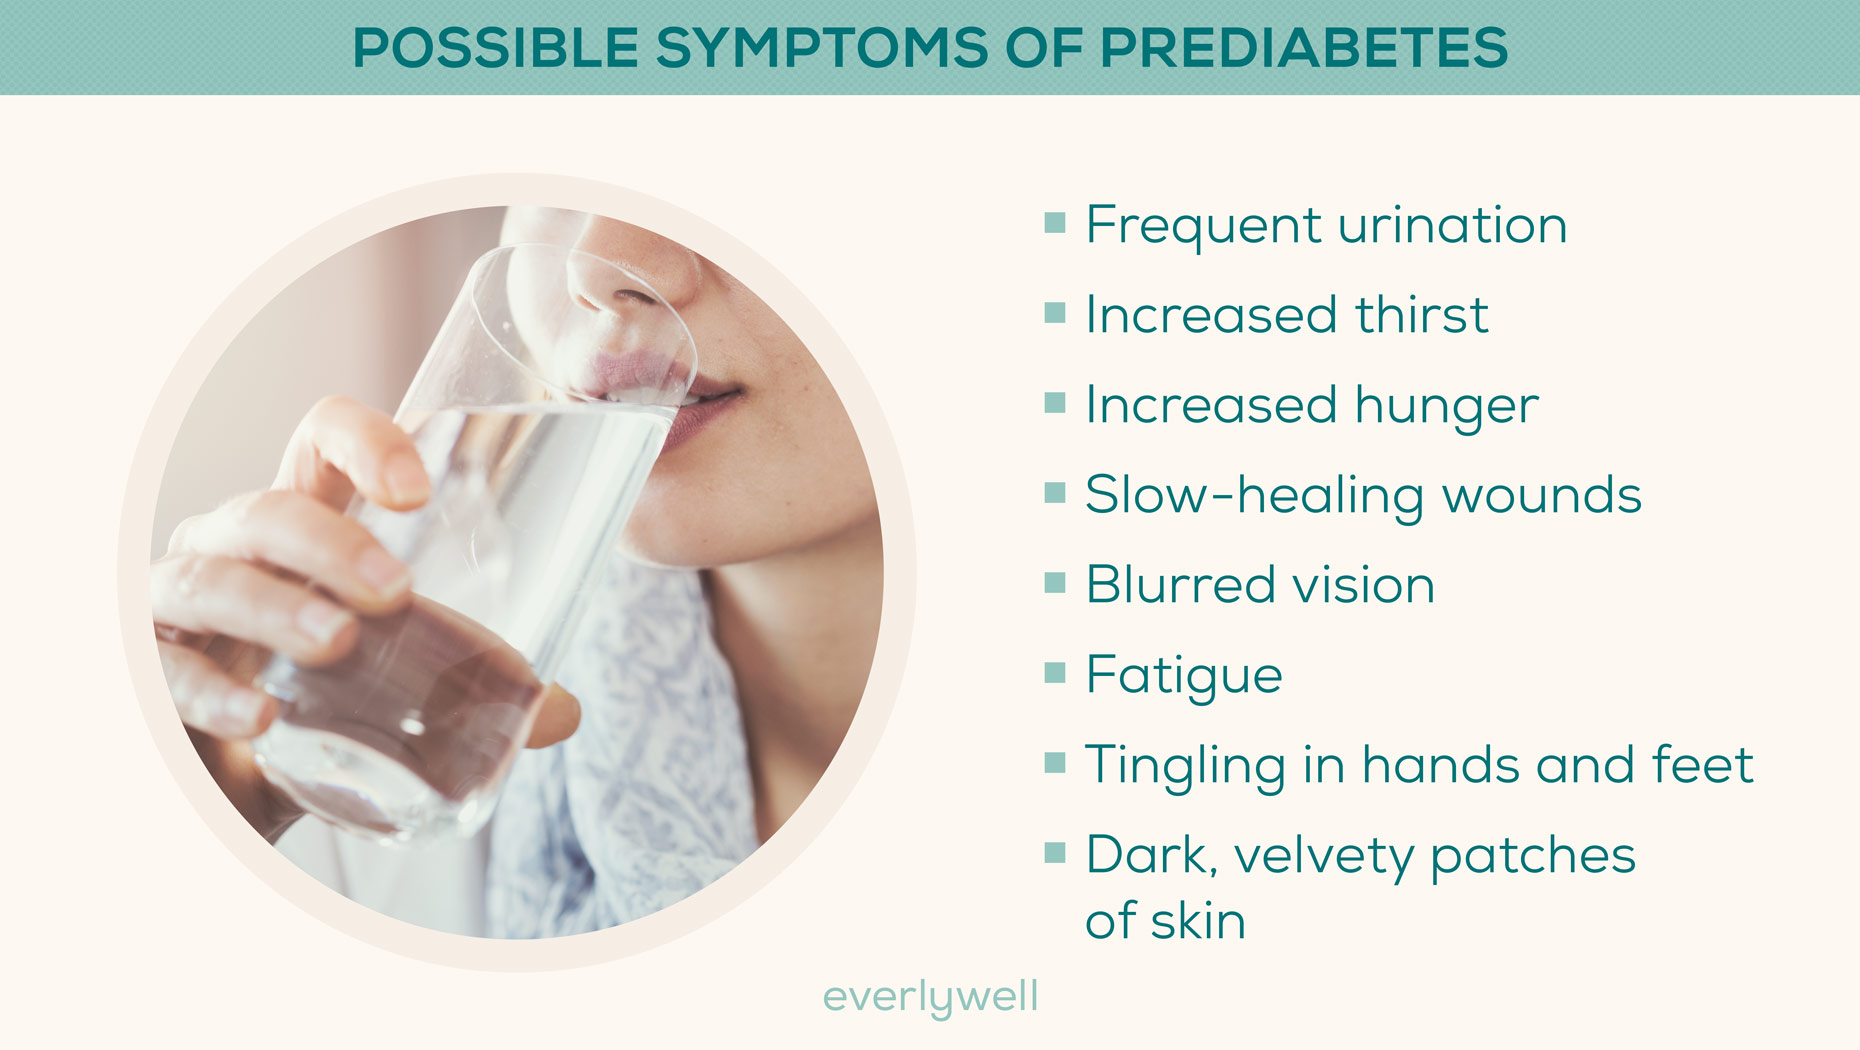 Prediabetes causes